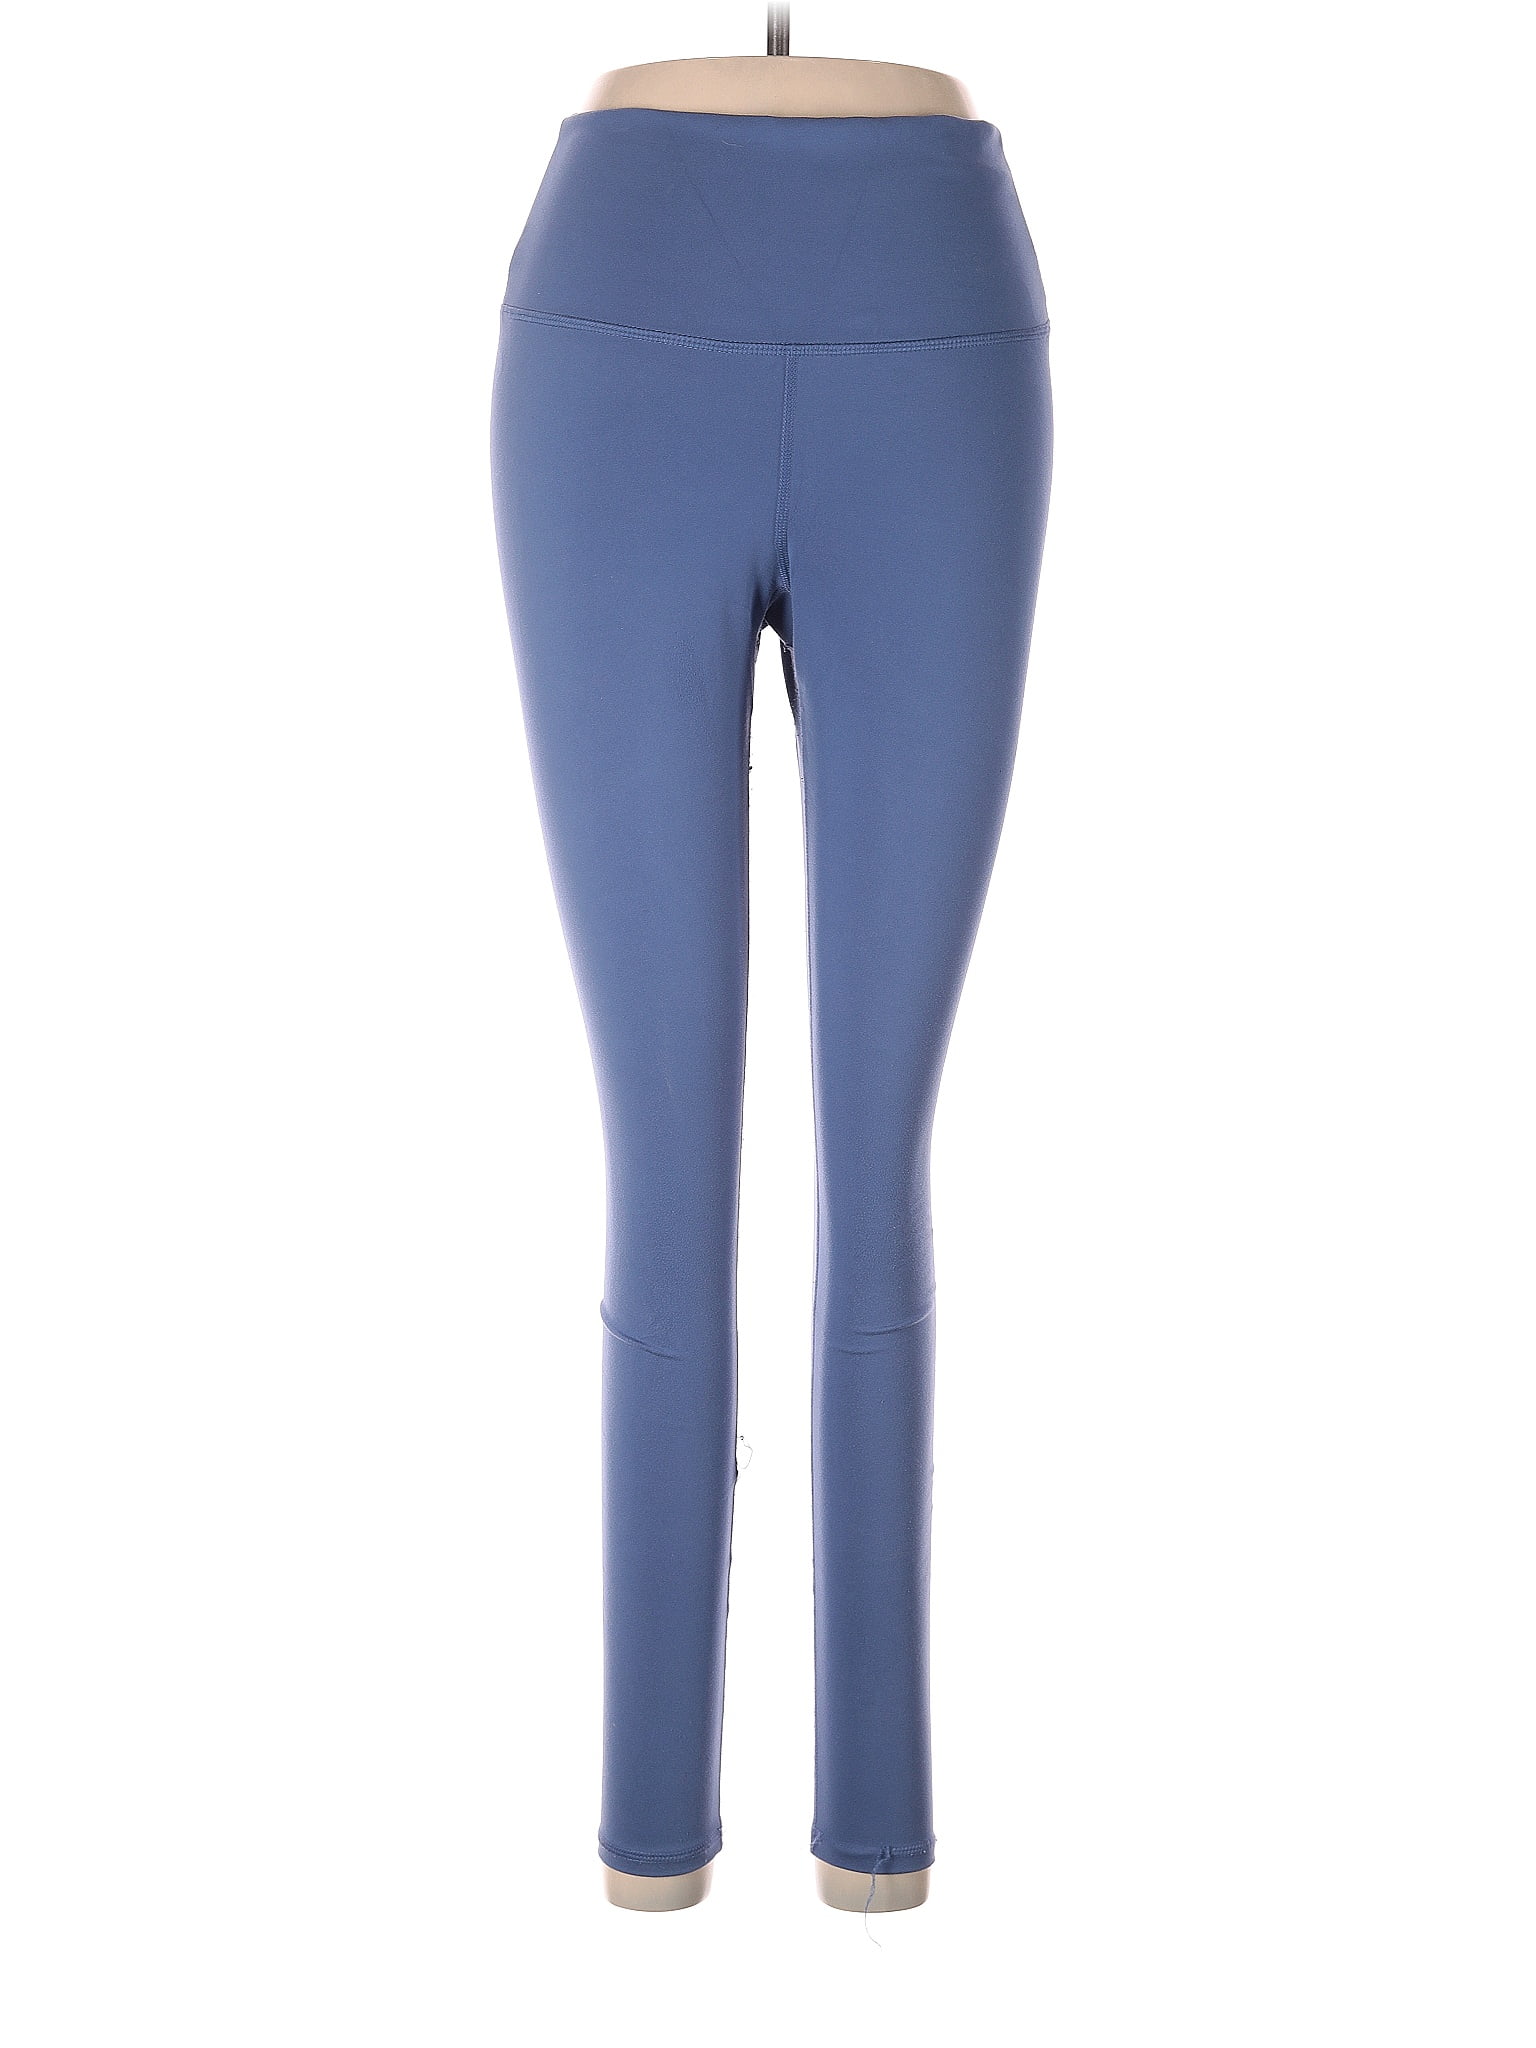 Lauren Conrad Blue Active Pants, Tights & Leggings